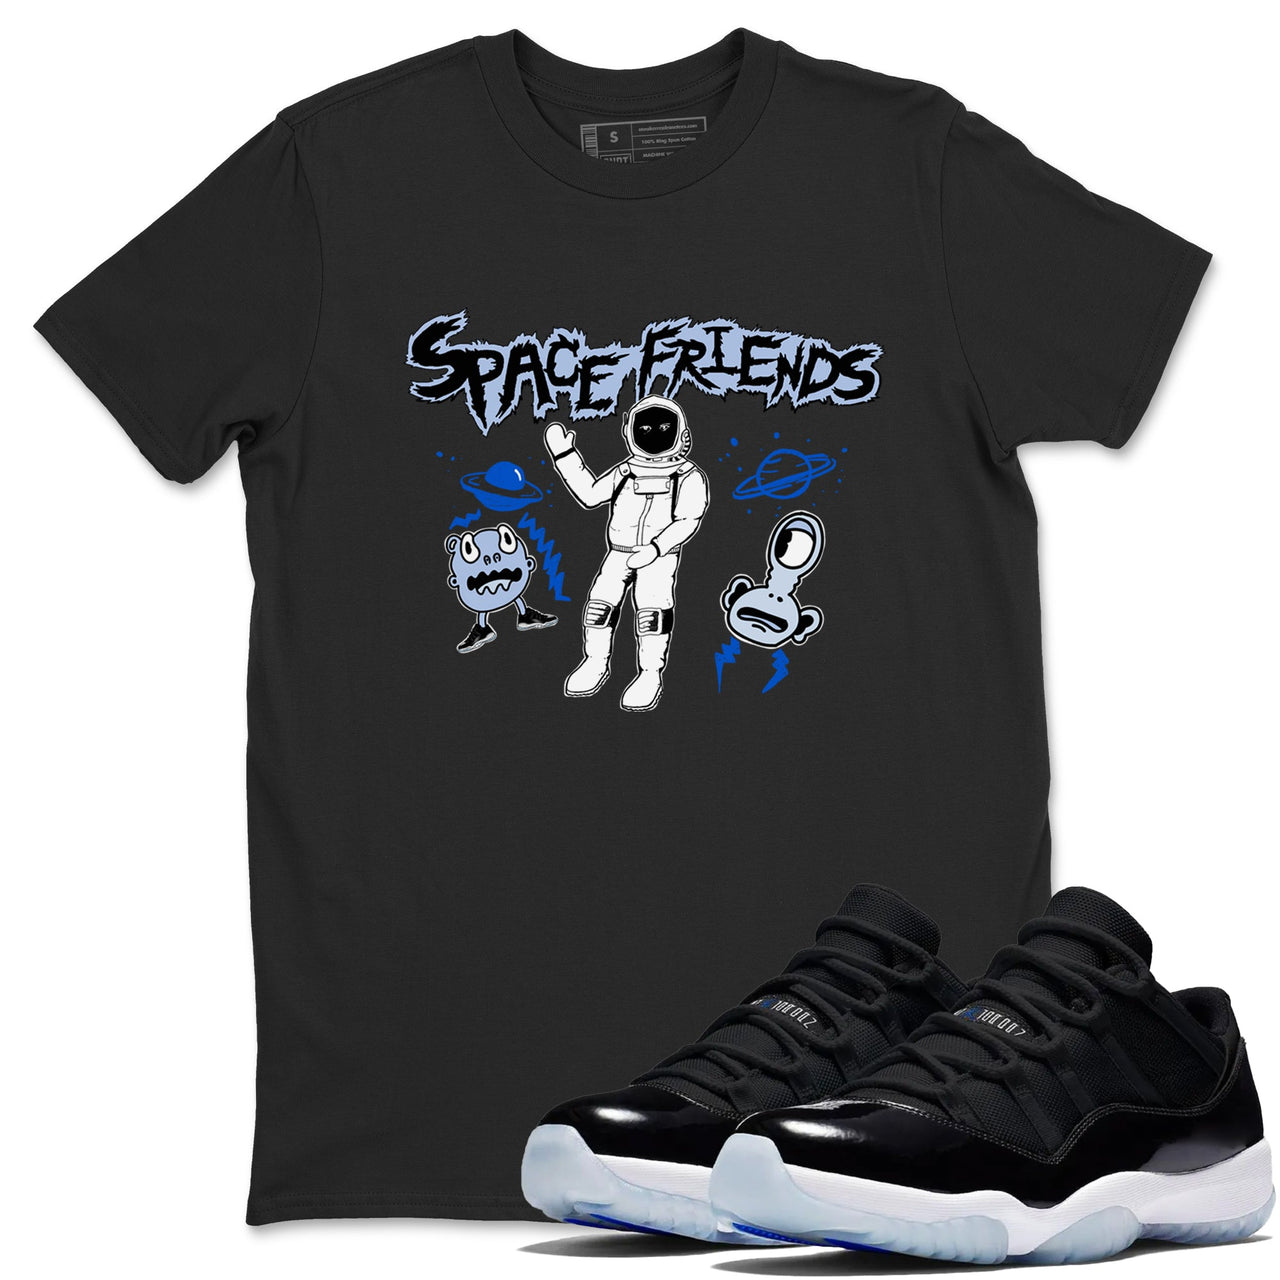 11s Space Jam shirt to match jordans Space Friends sneaker tees Air Jordan 11 Retro Space Jam Streetwear Brand SNRT Sneaker Release Tees unisex cotton Black 1 crew neck shirt